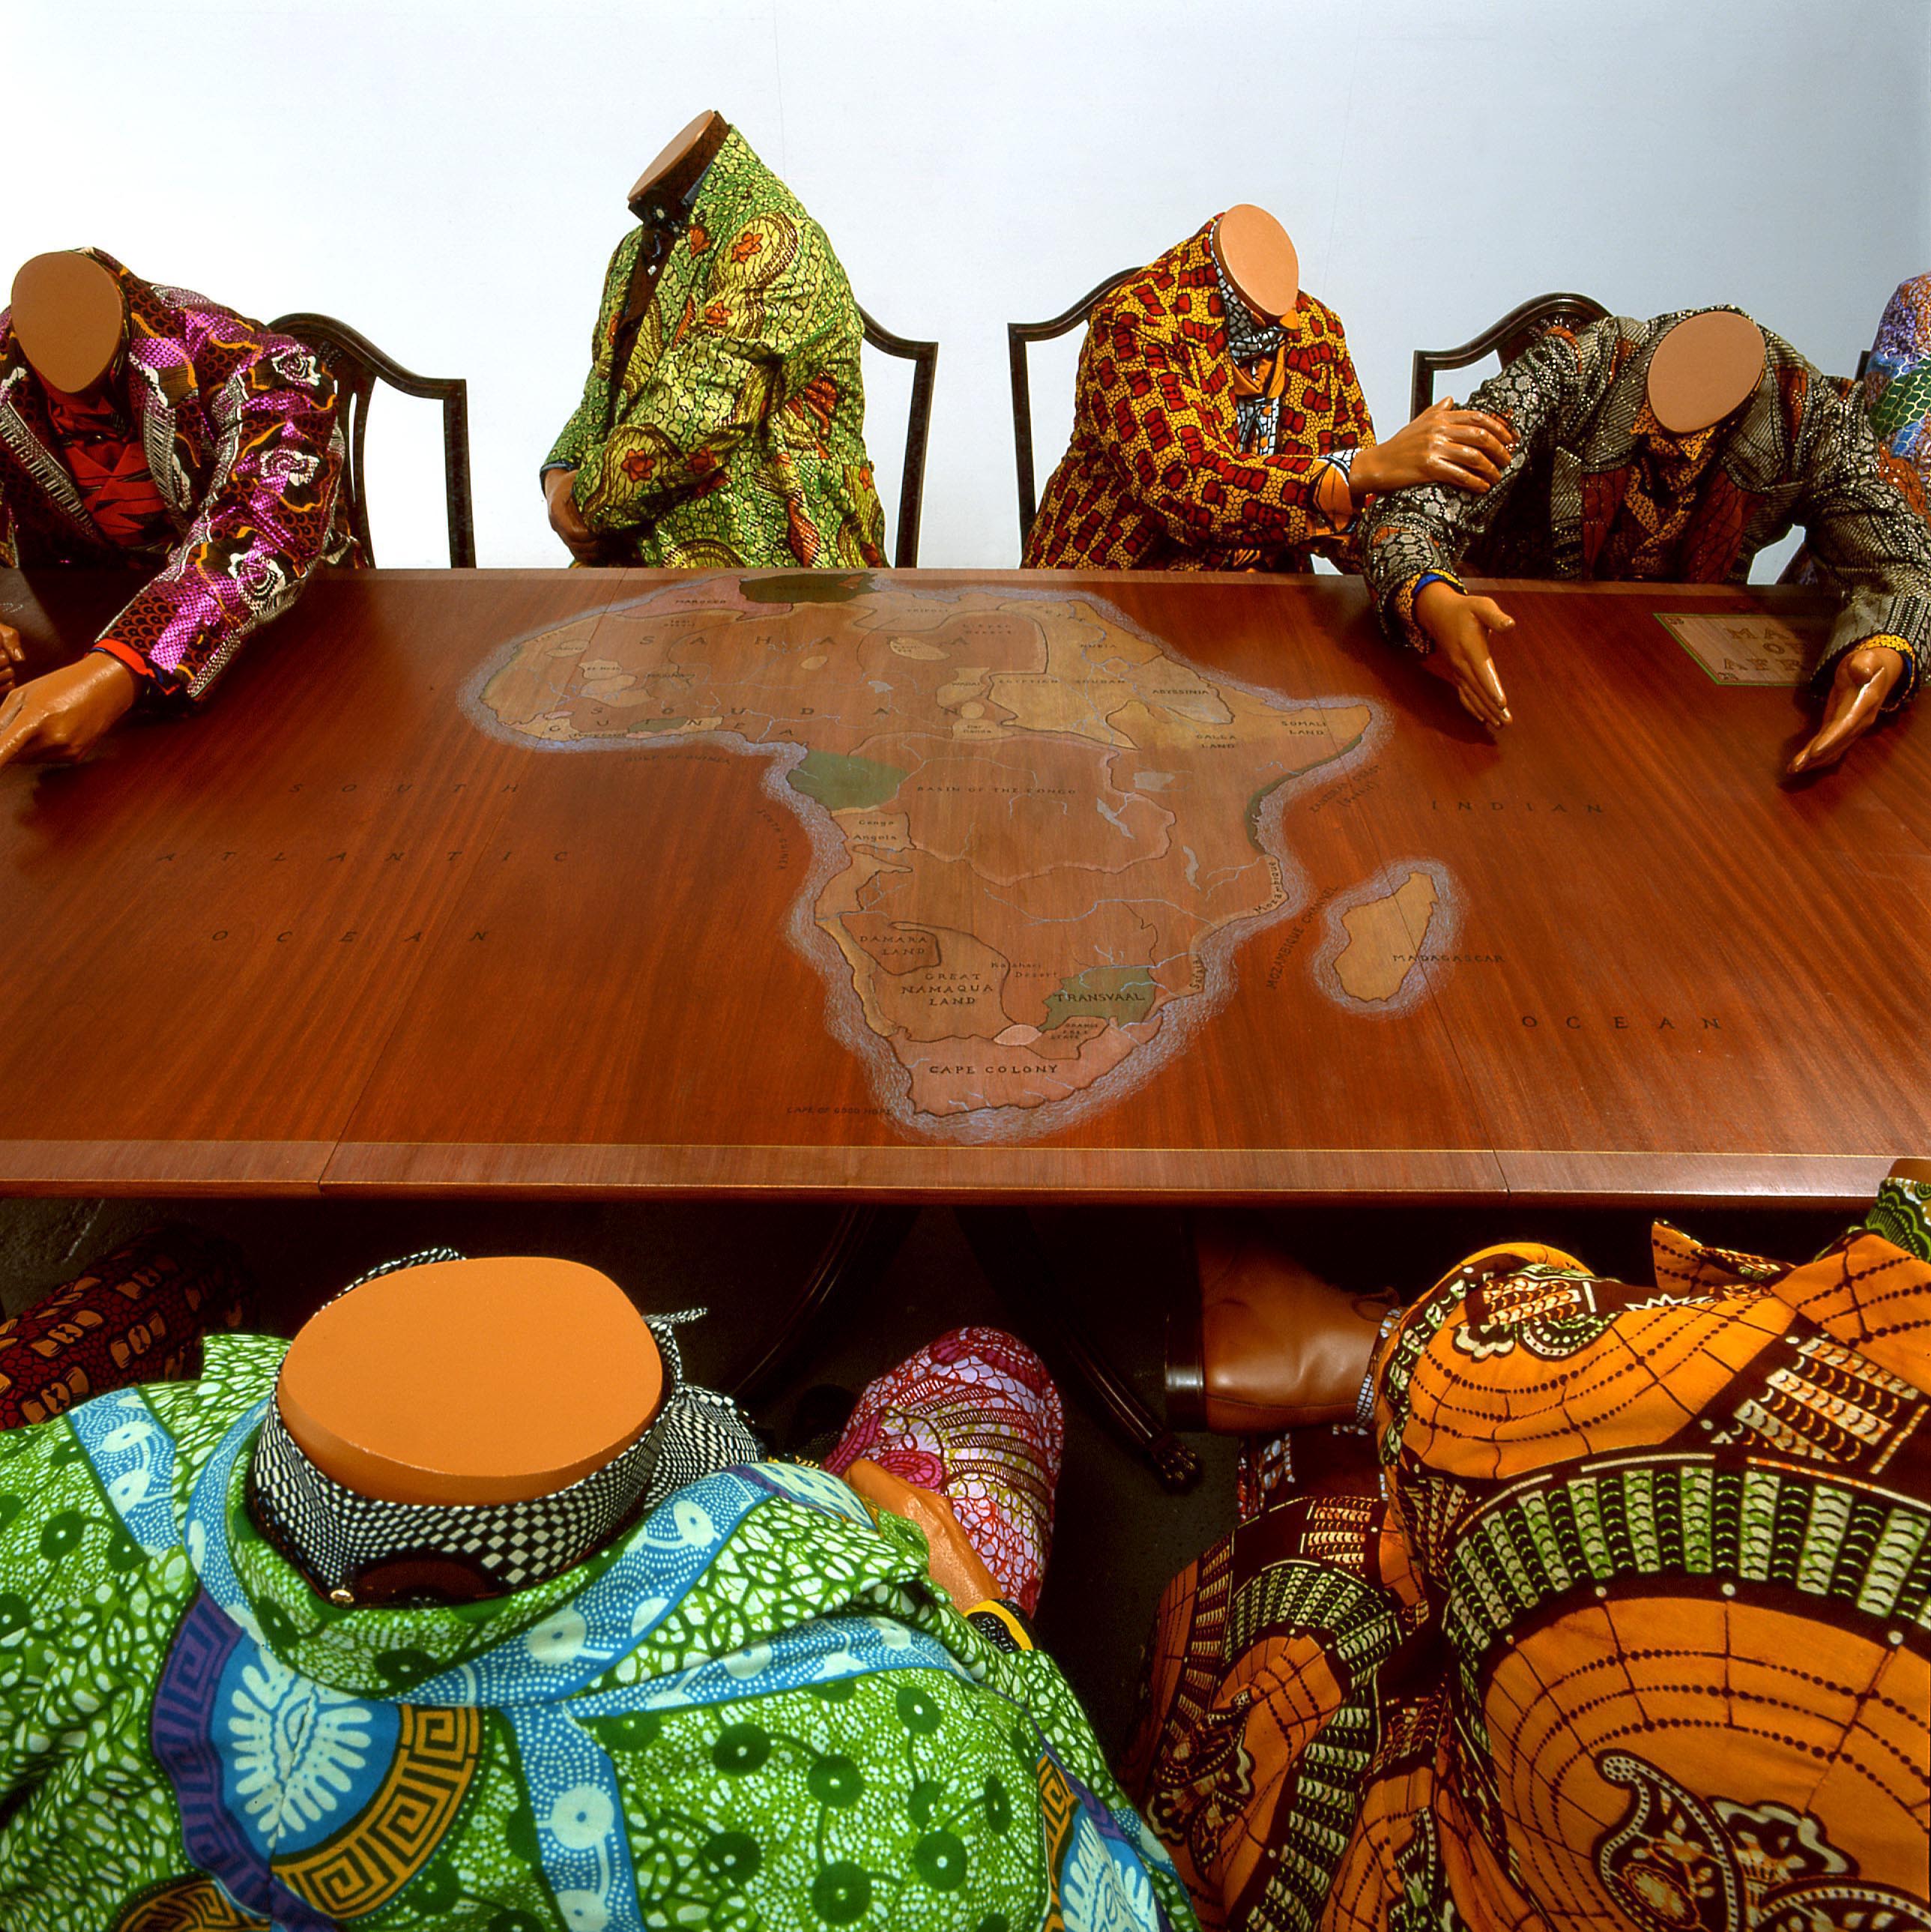 Yinka Shonibare's colorful artworks subvert colonial narratives